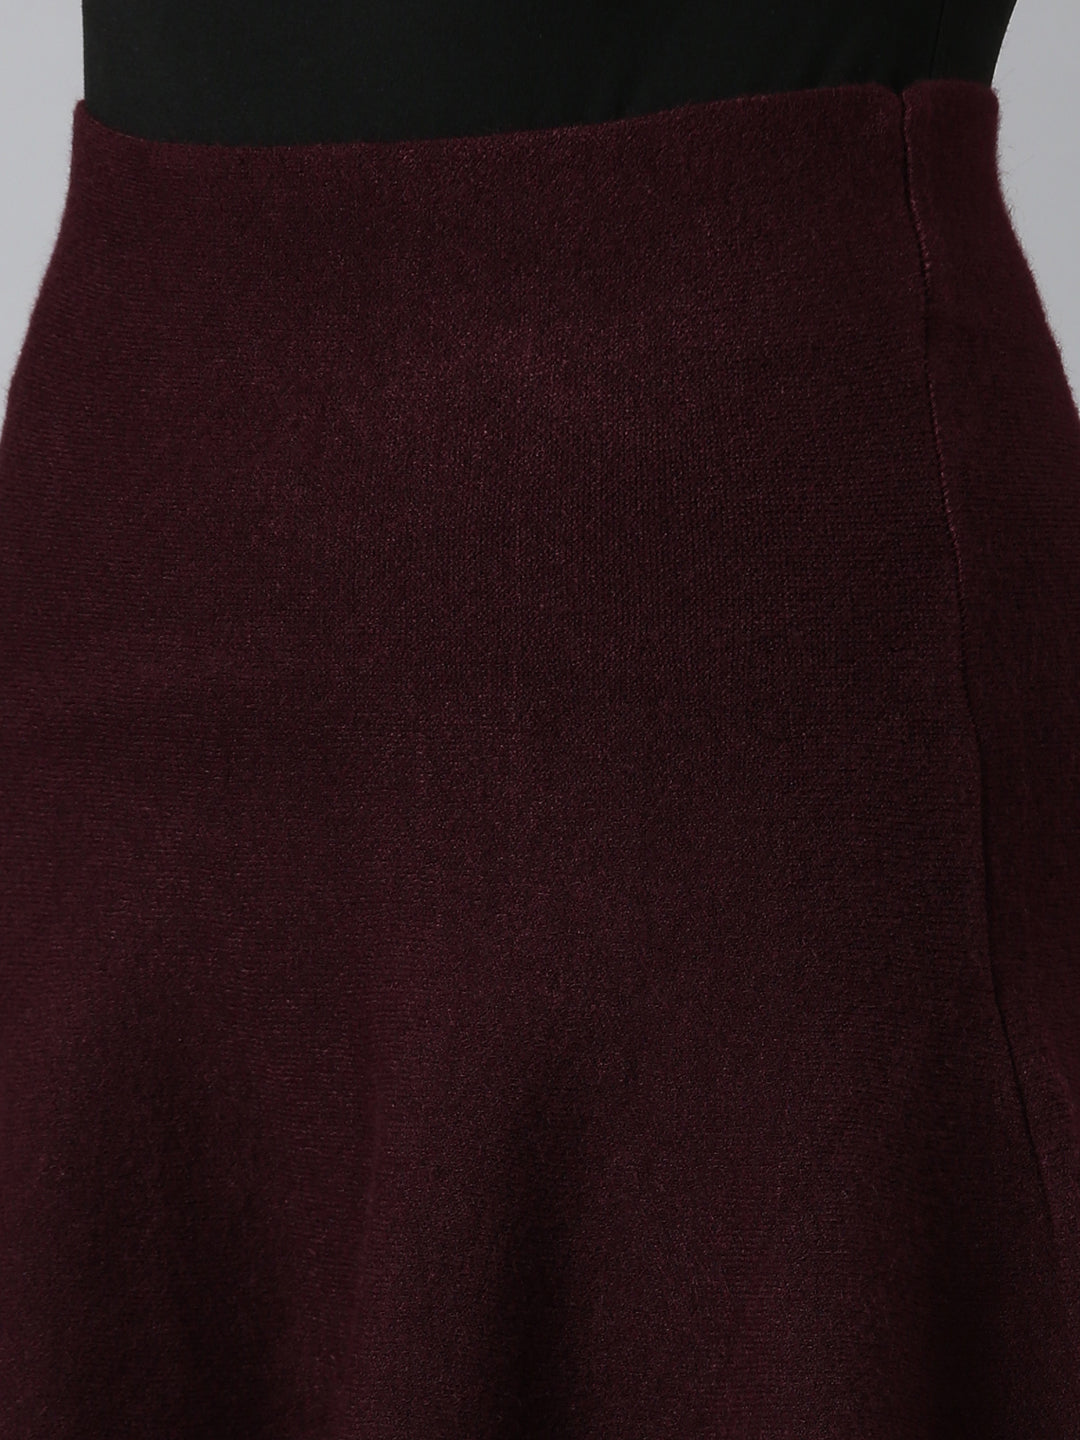 Women Burgundy Solid Pencil Skirt